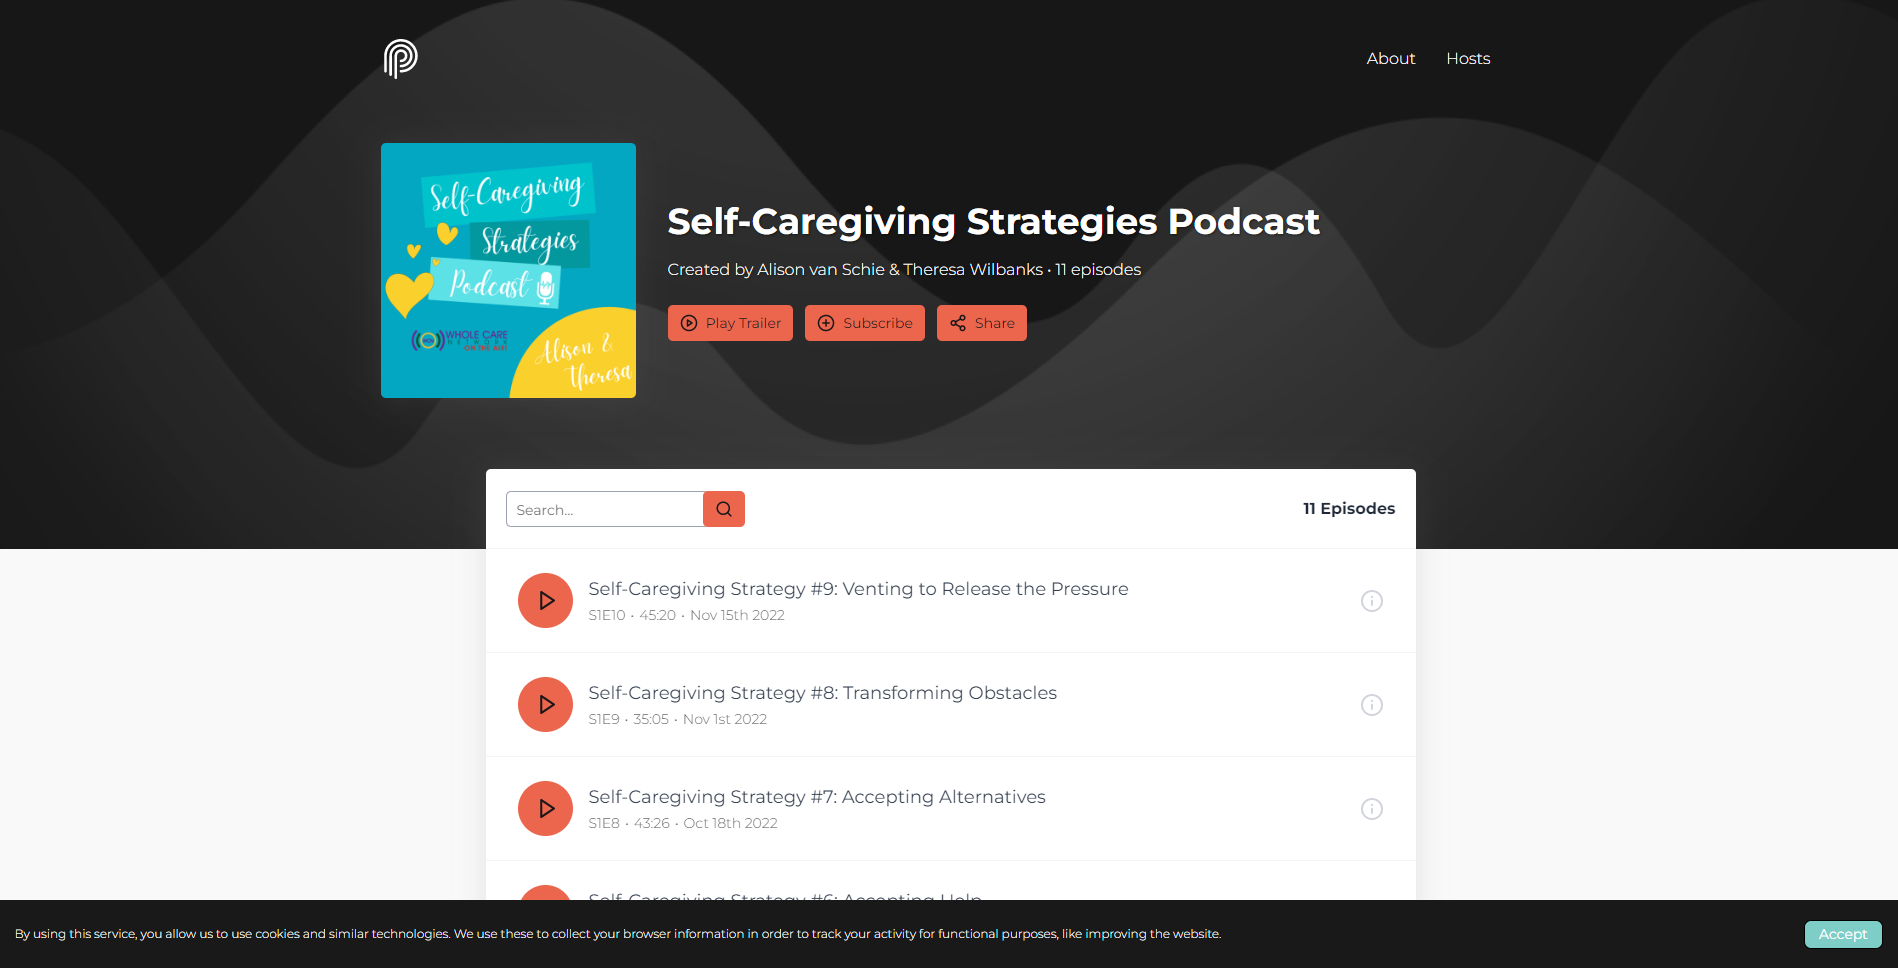 Self-Caregiving Strategies Podcast